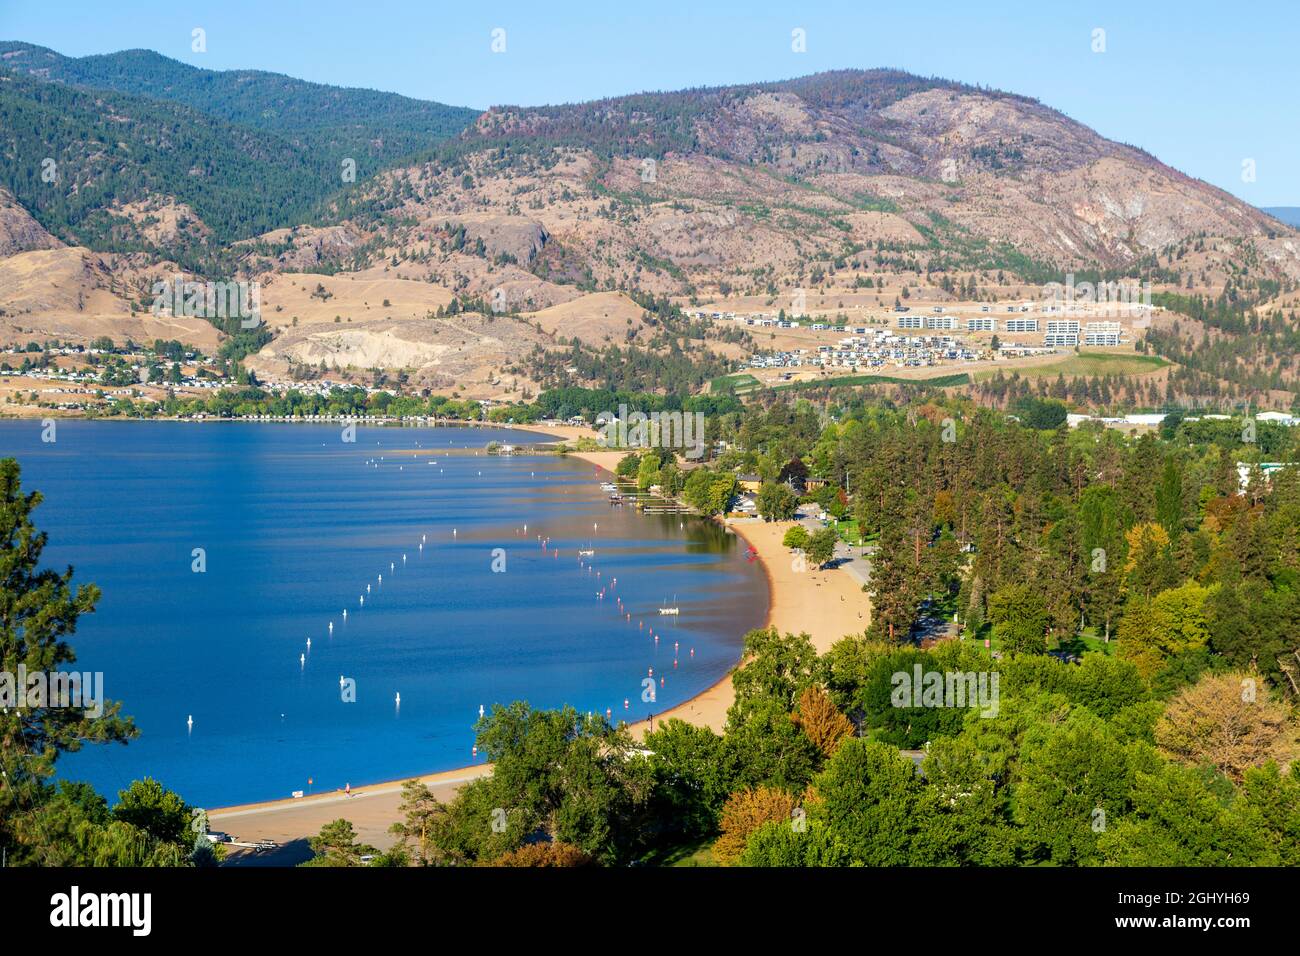 View of Skaha Lake in the Okanagan Valley in Penticton, British Columbia, Canada. Stock Photo